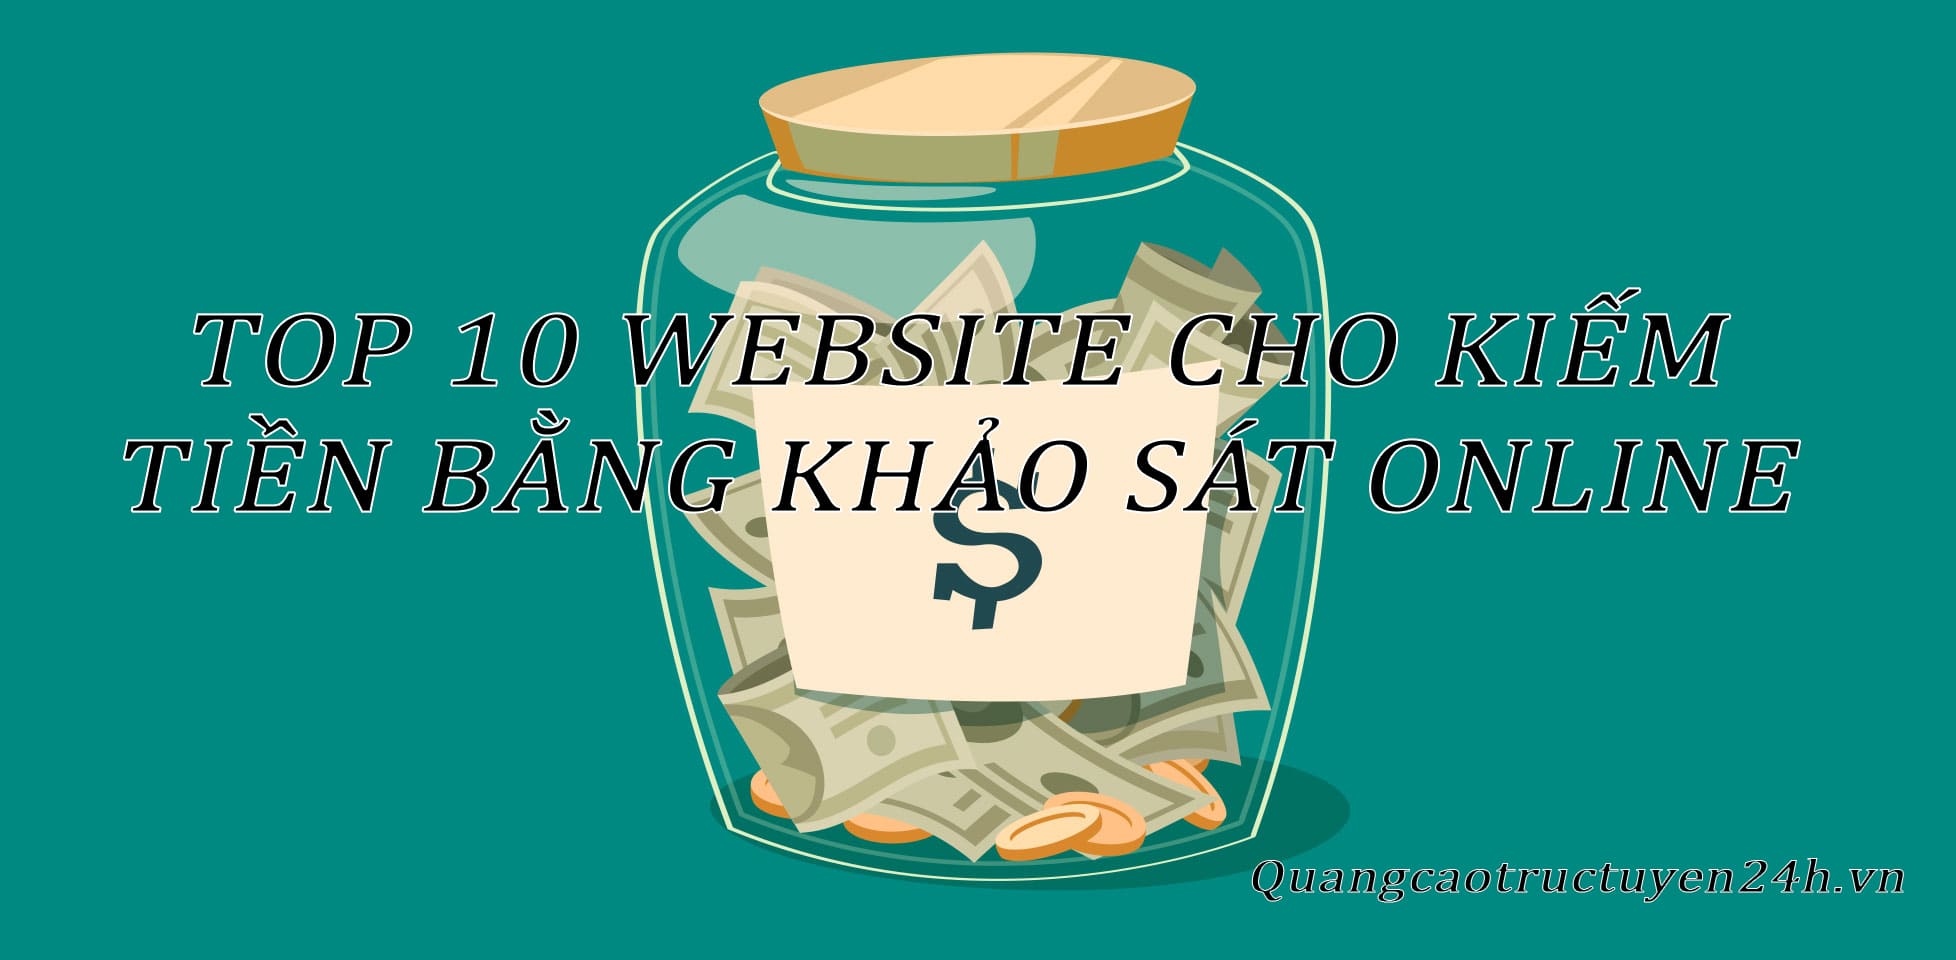 10 website cho Kiếm tiền bằng khảo sát Online